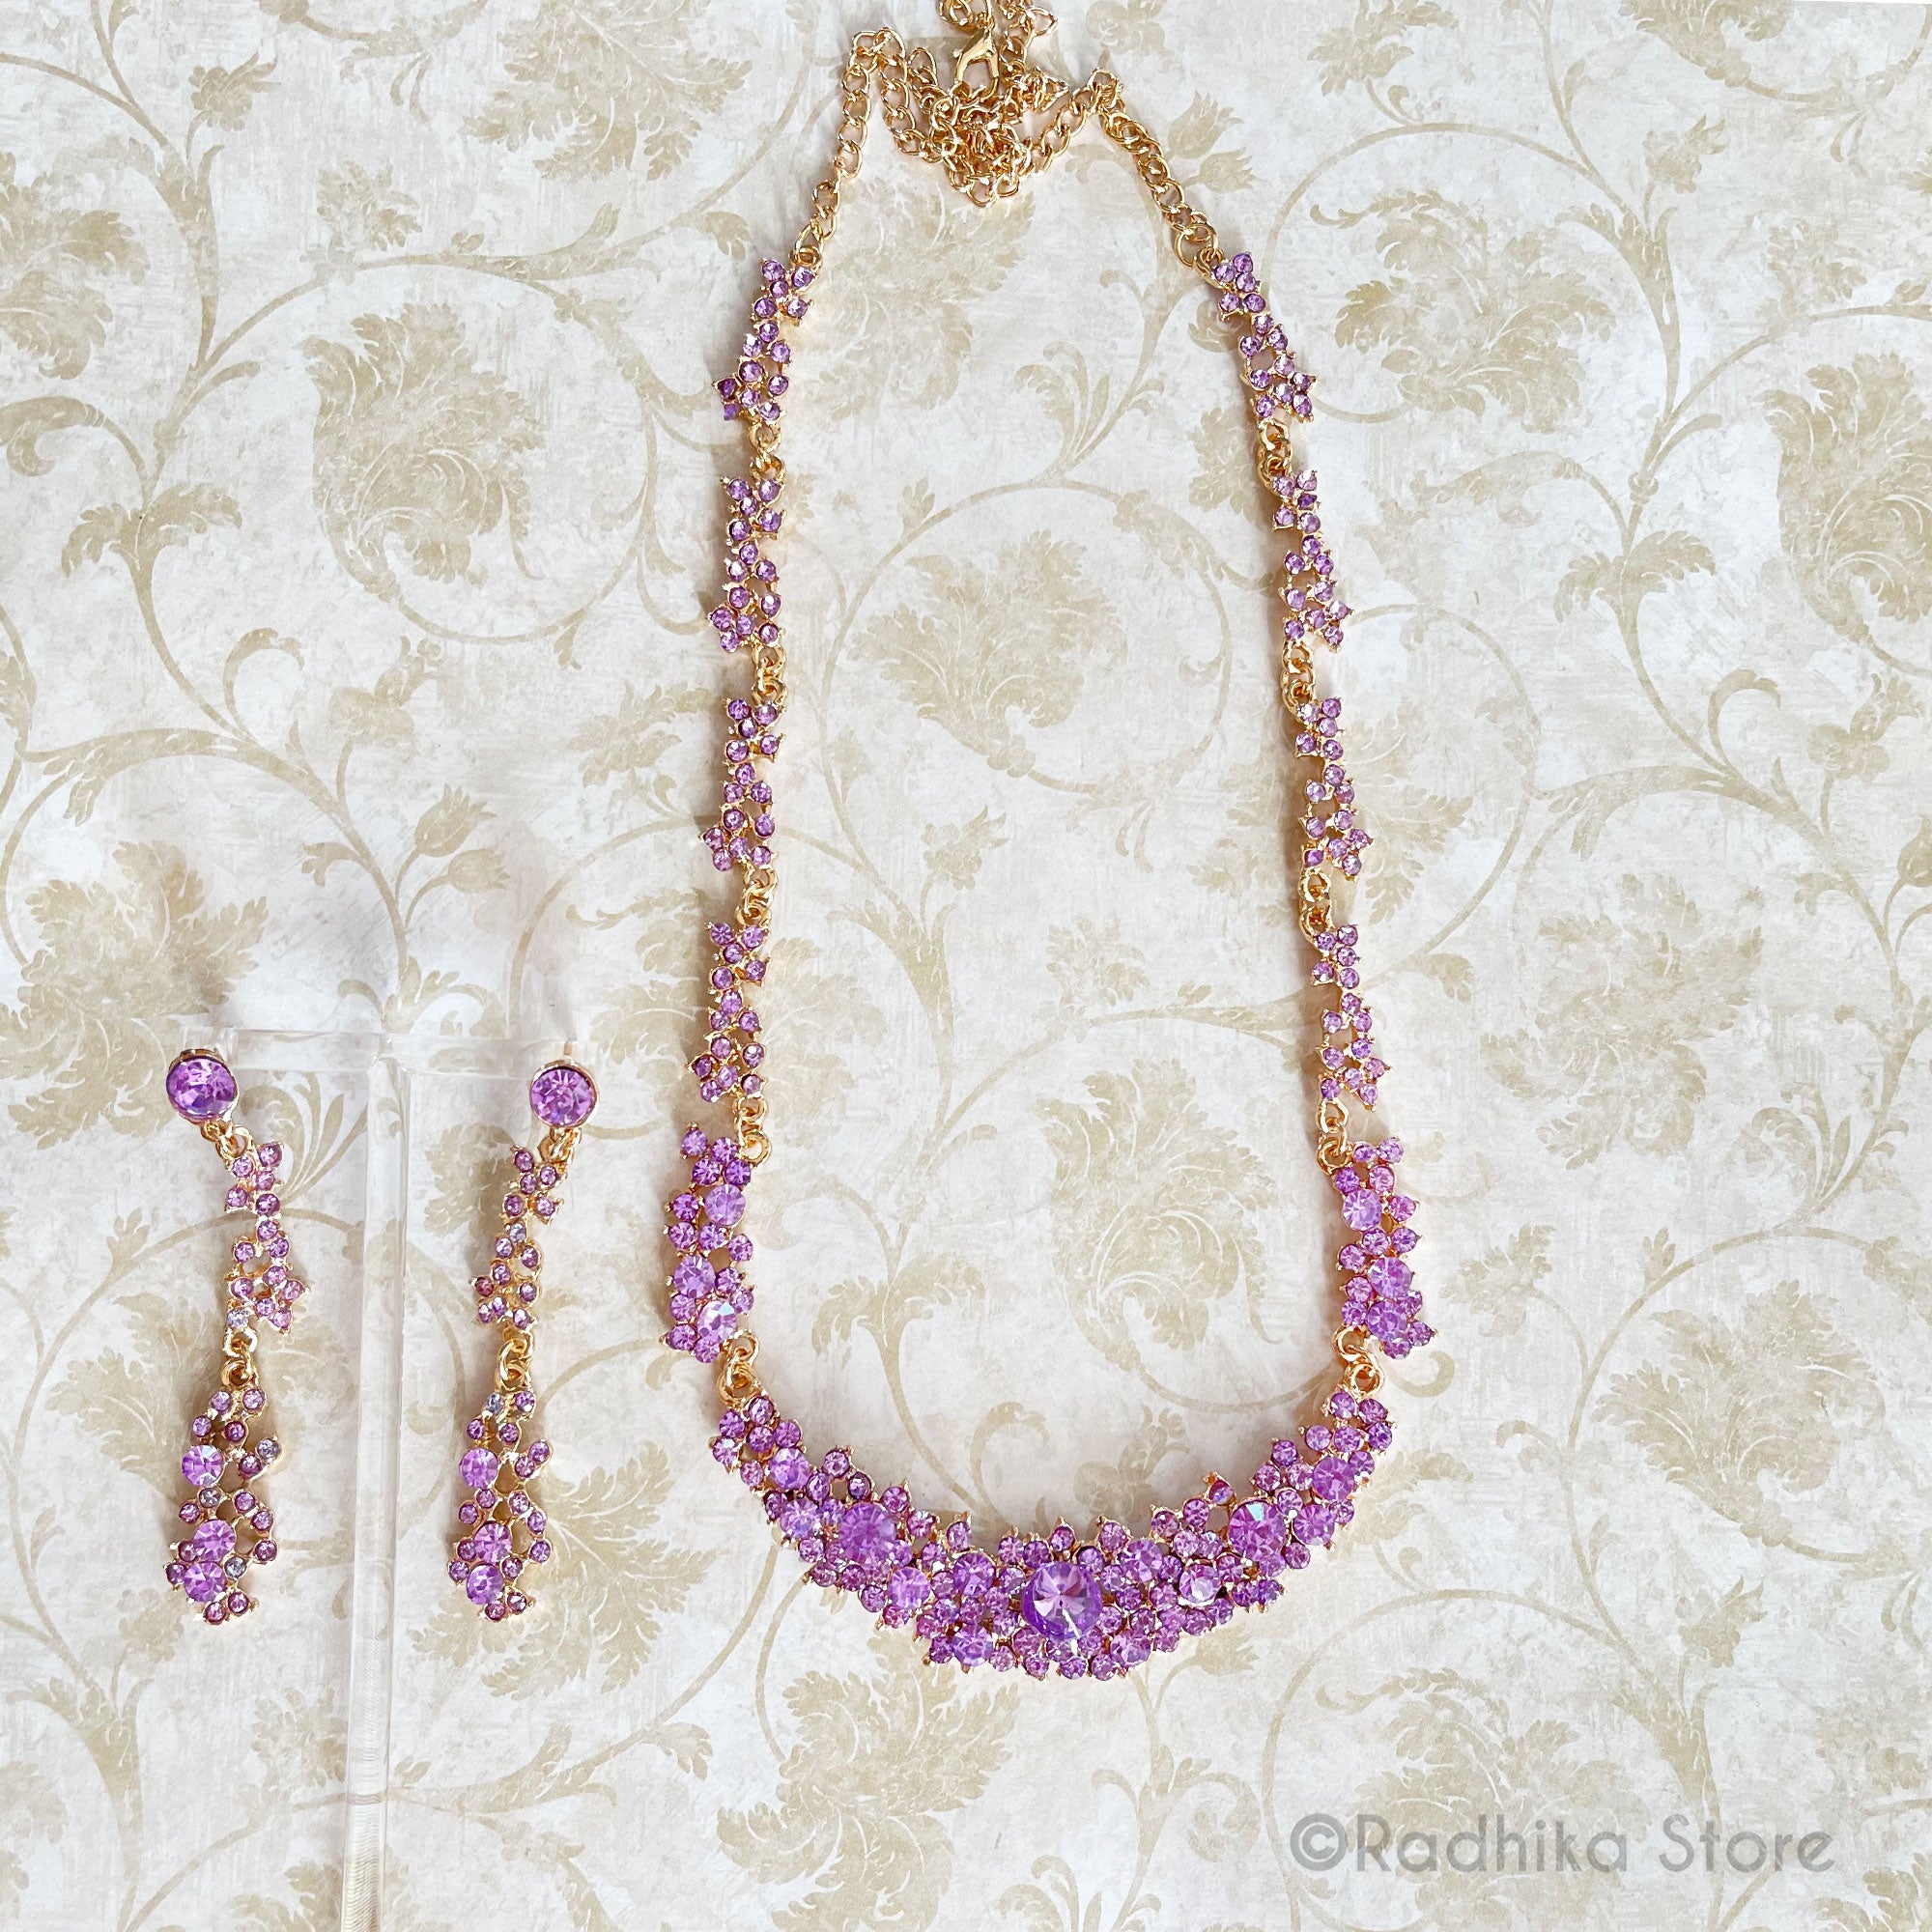 Madhuram - Rhinestone - Deity Necklace And Earring Set- Pink or Light Purple